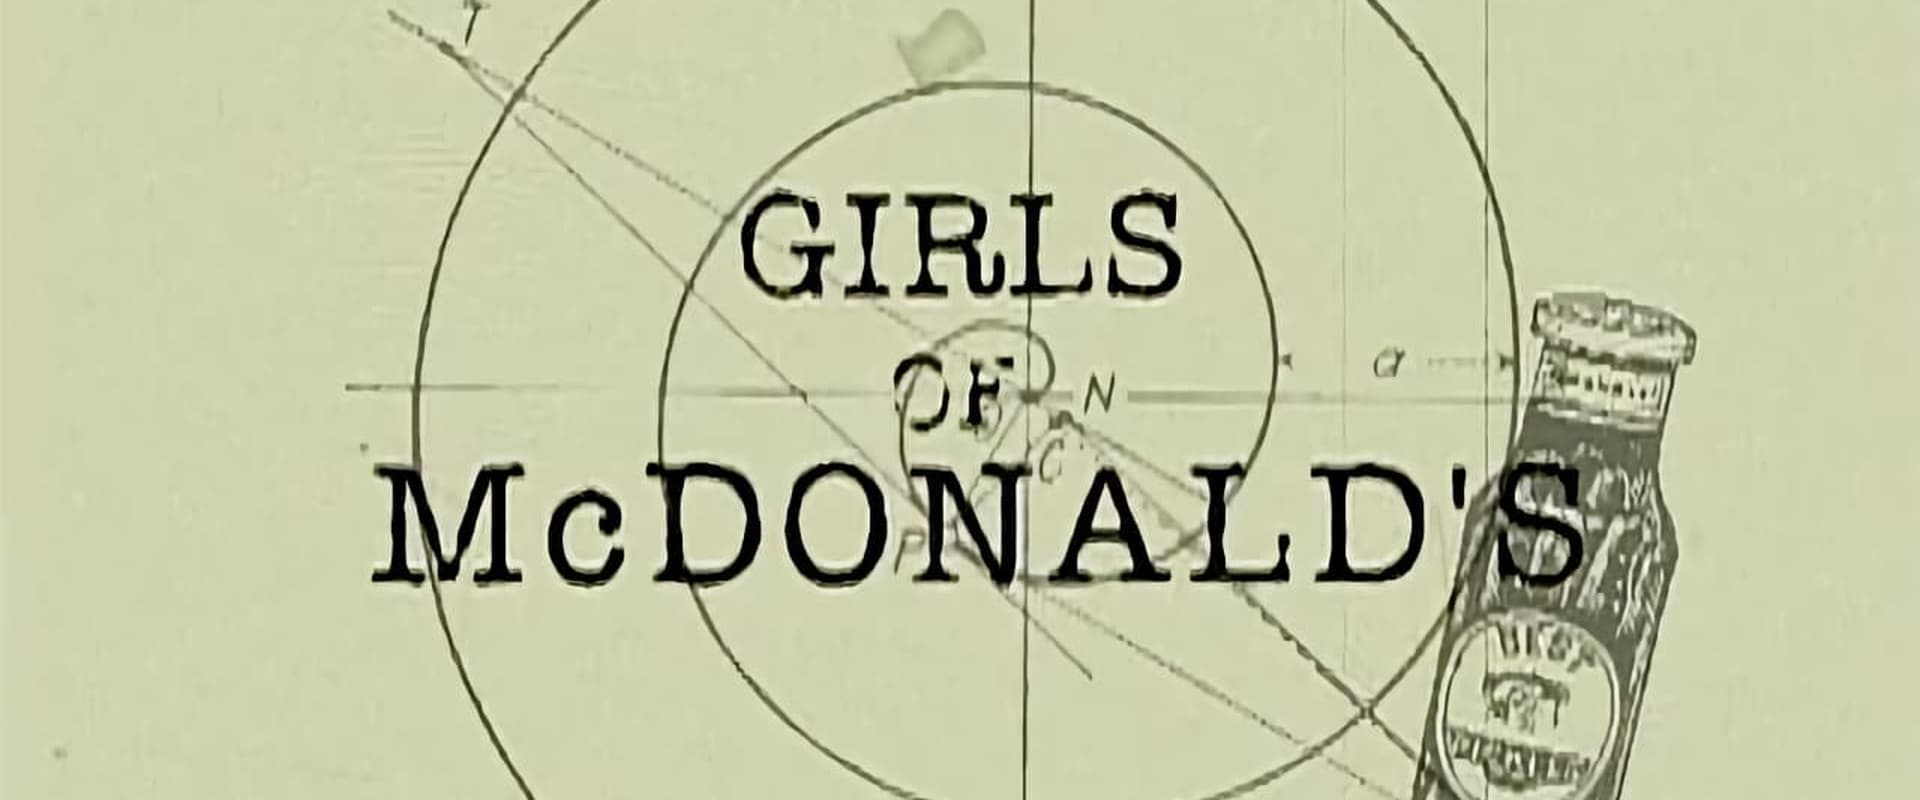 Playboy: Girls of McDonald's